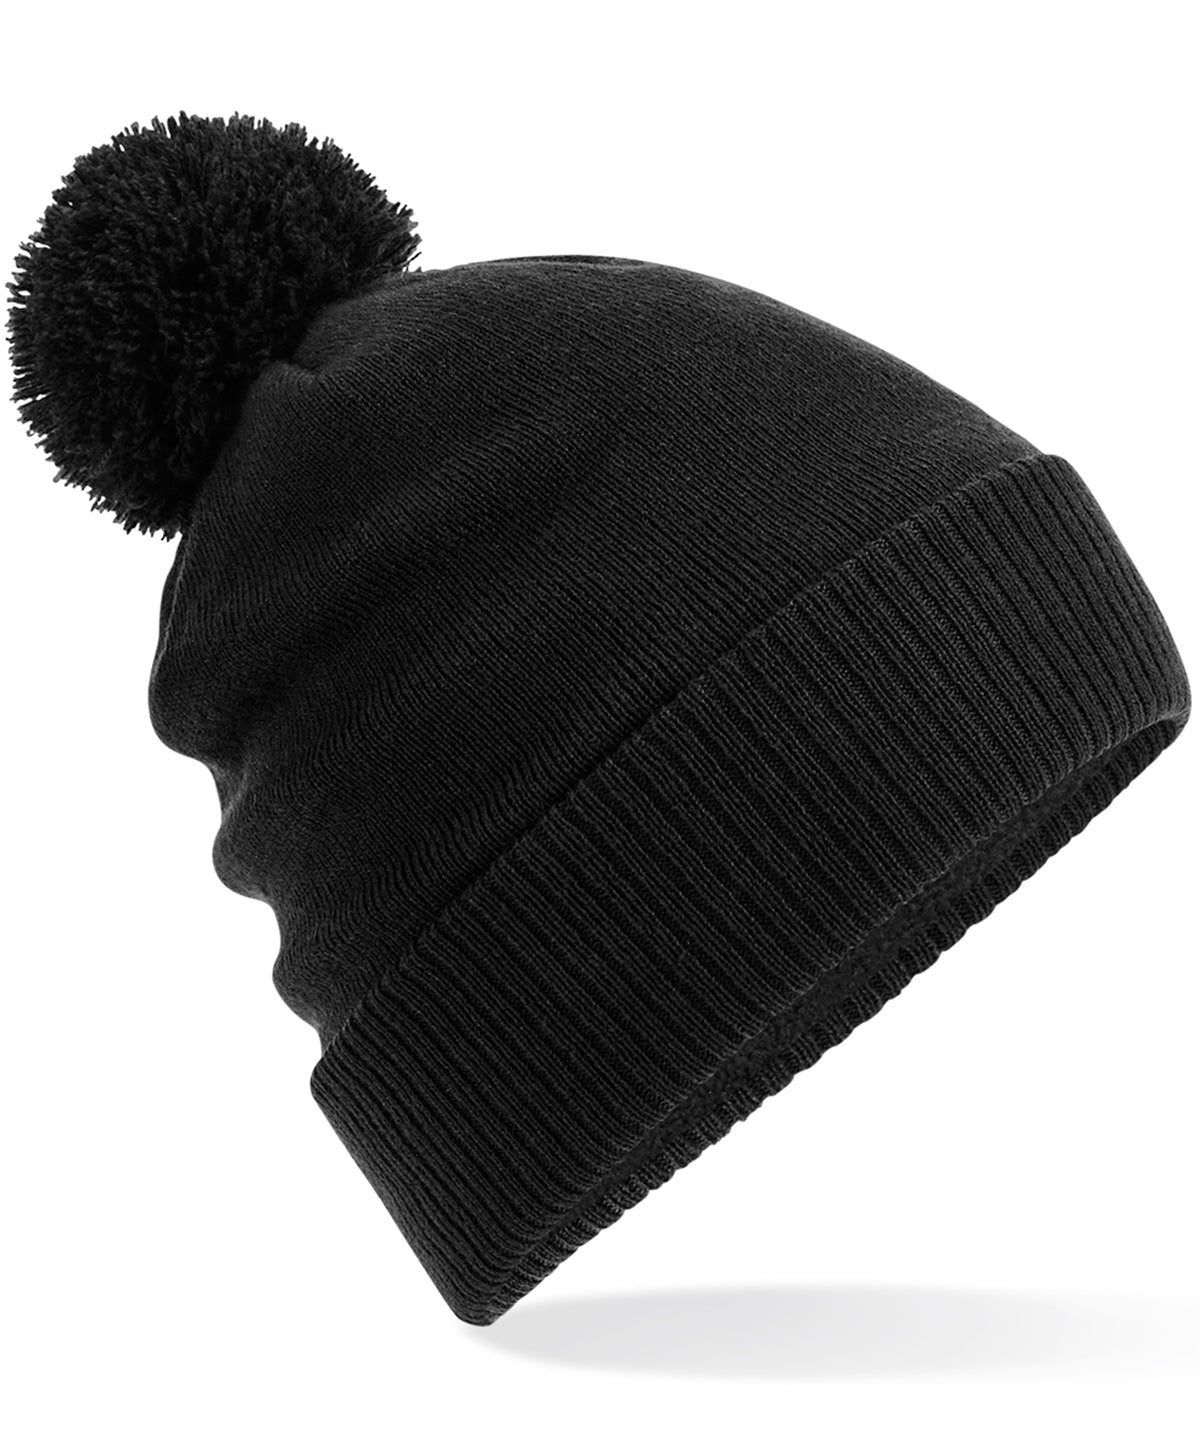 Personalised Hats - Black Beechfield Water-repellent thermal Snowstar® beanie